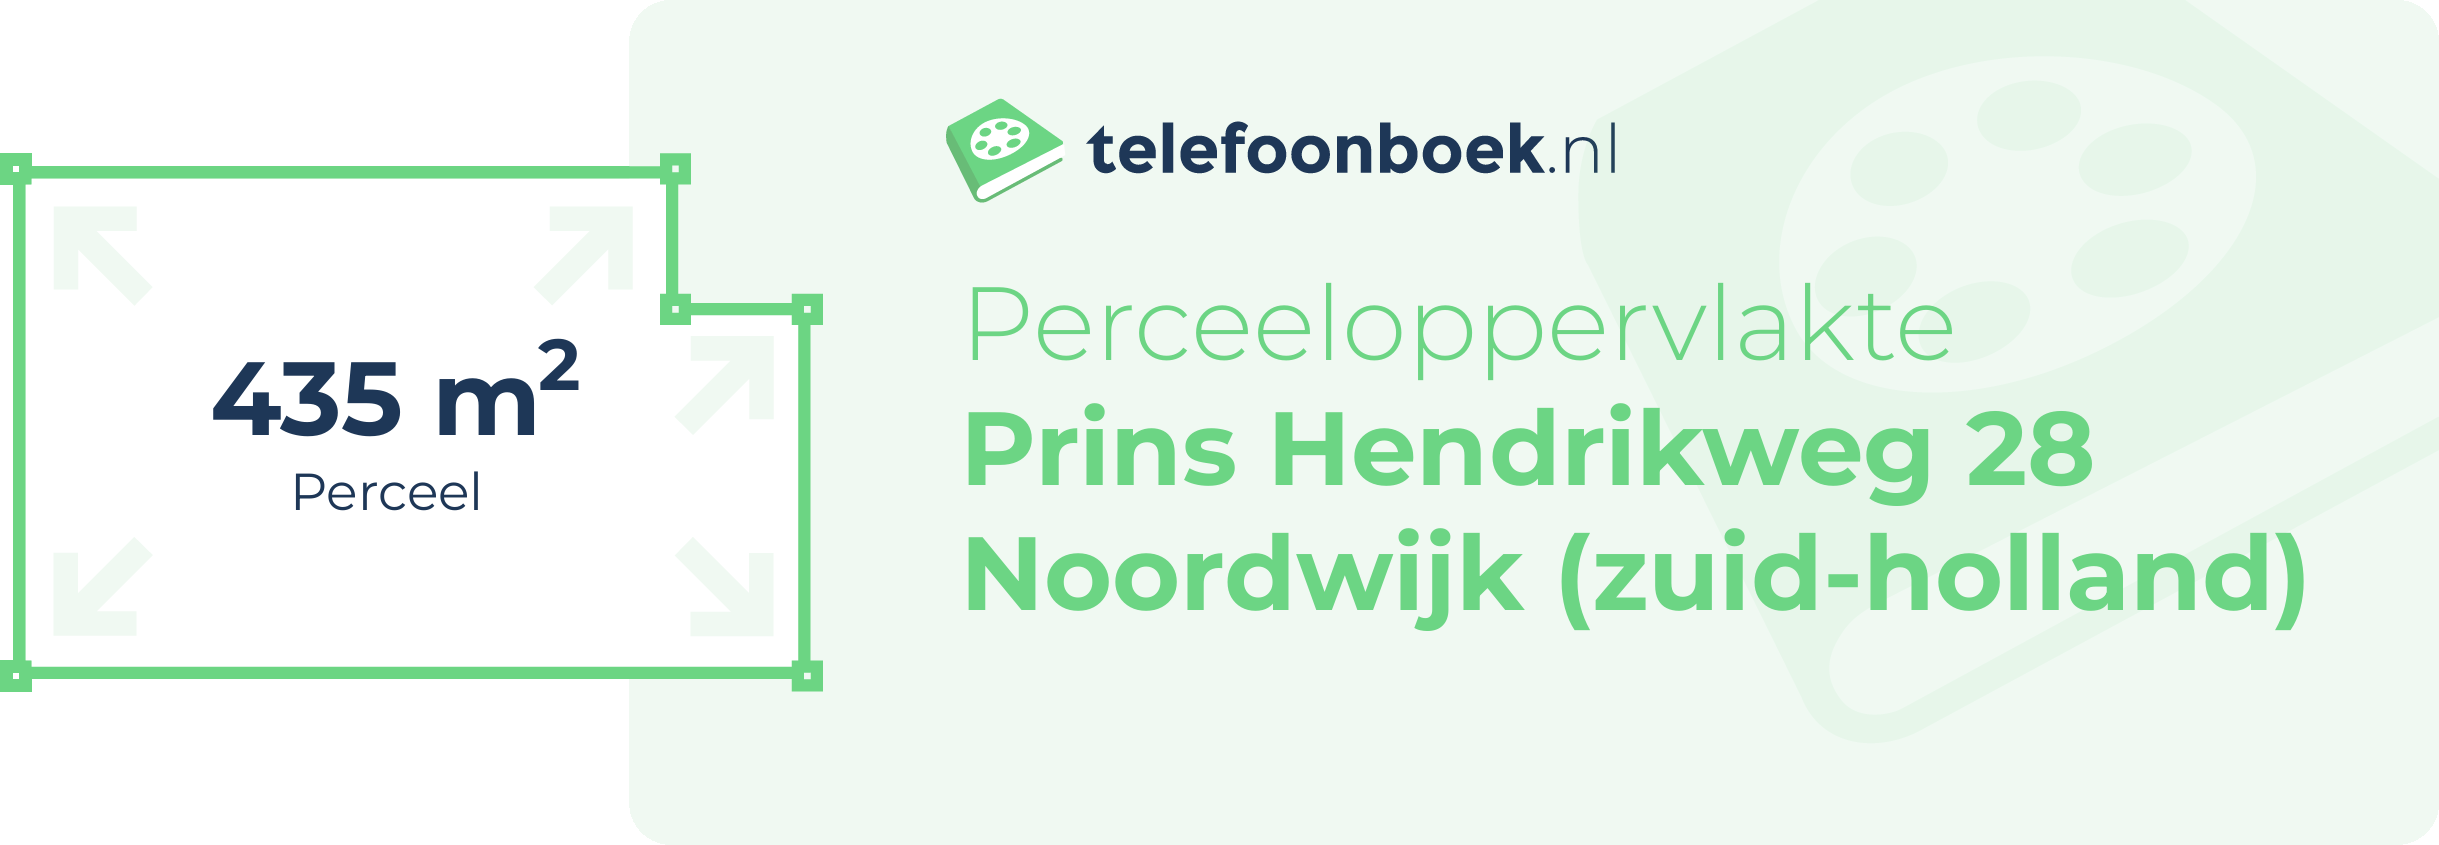 Perceeloppervlakte Prins Hendrikweg 28 Noordwijk (Zuid-Holland)